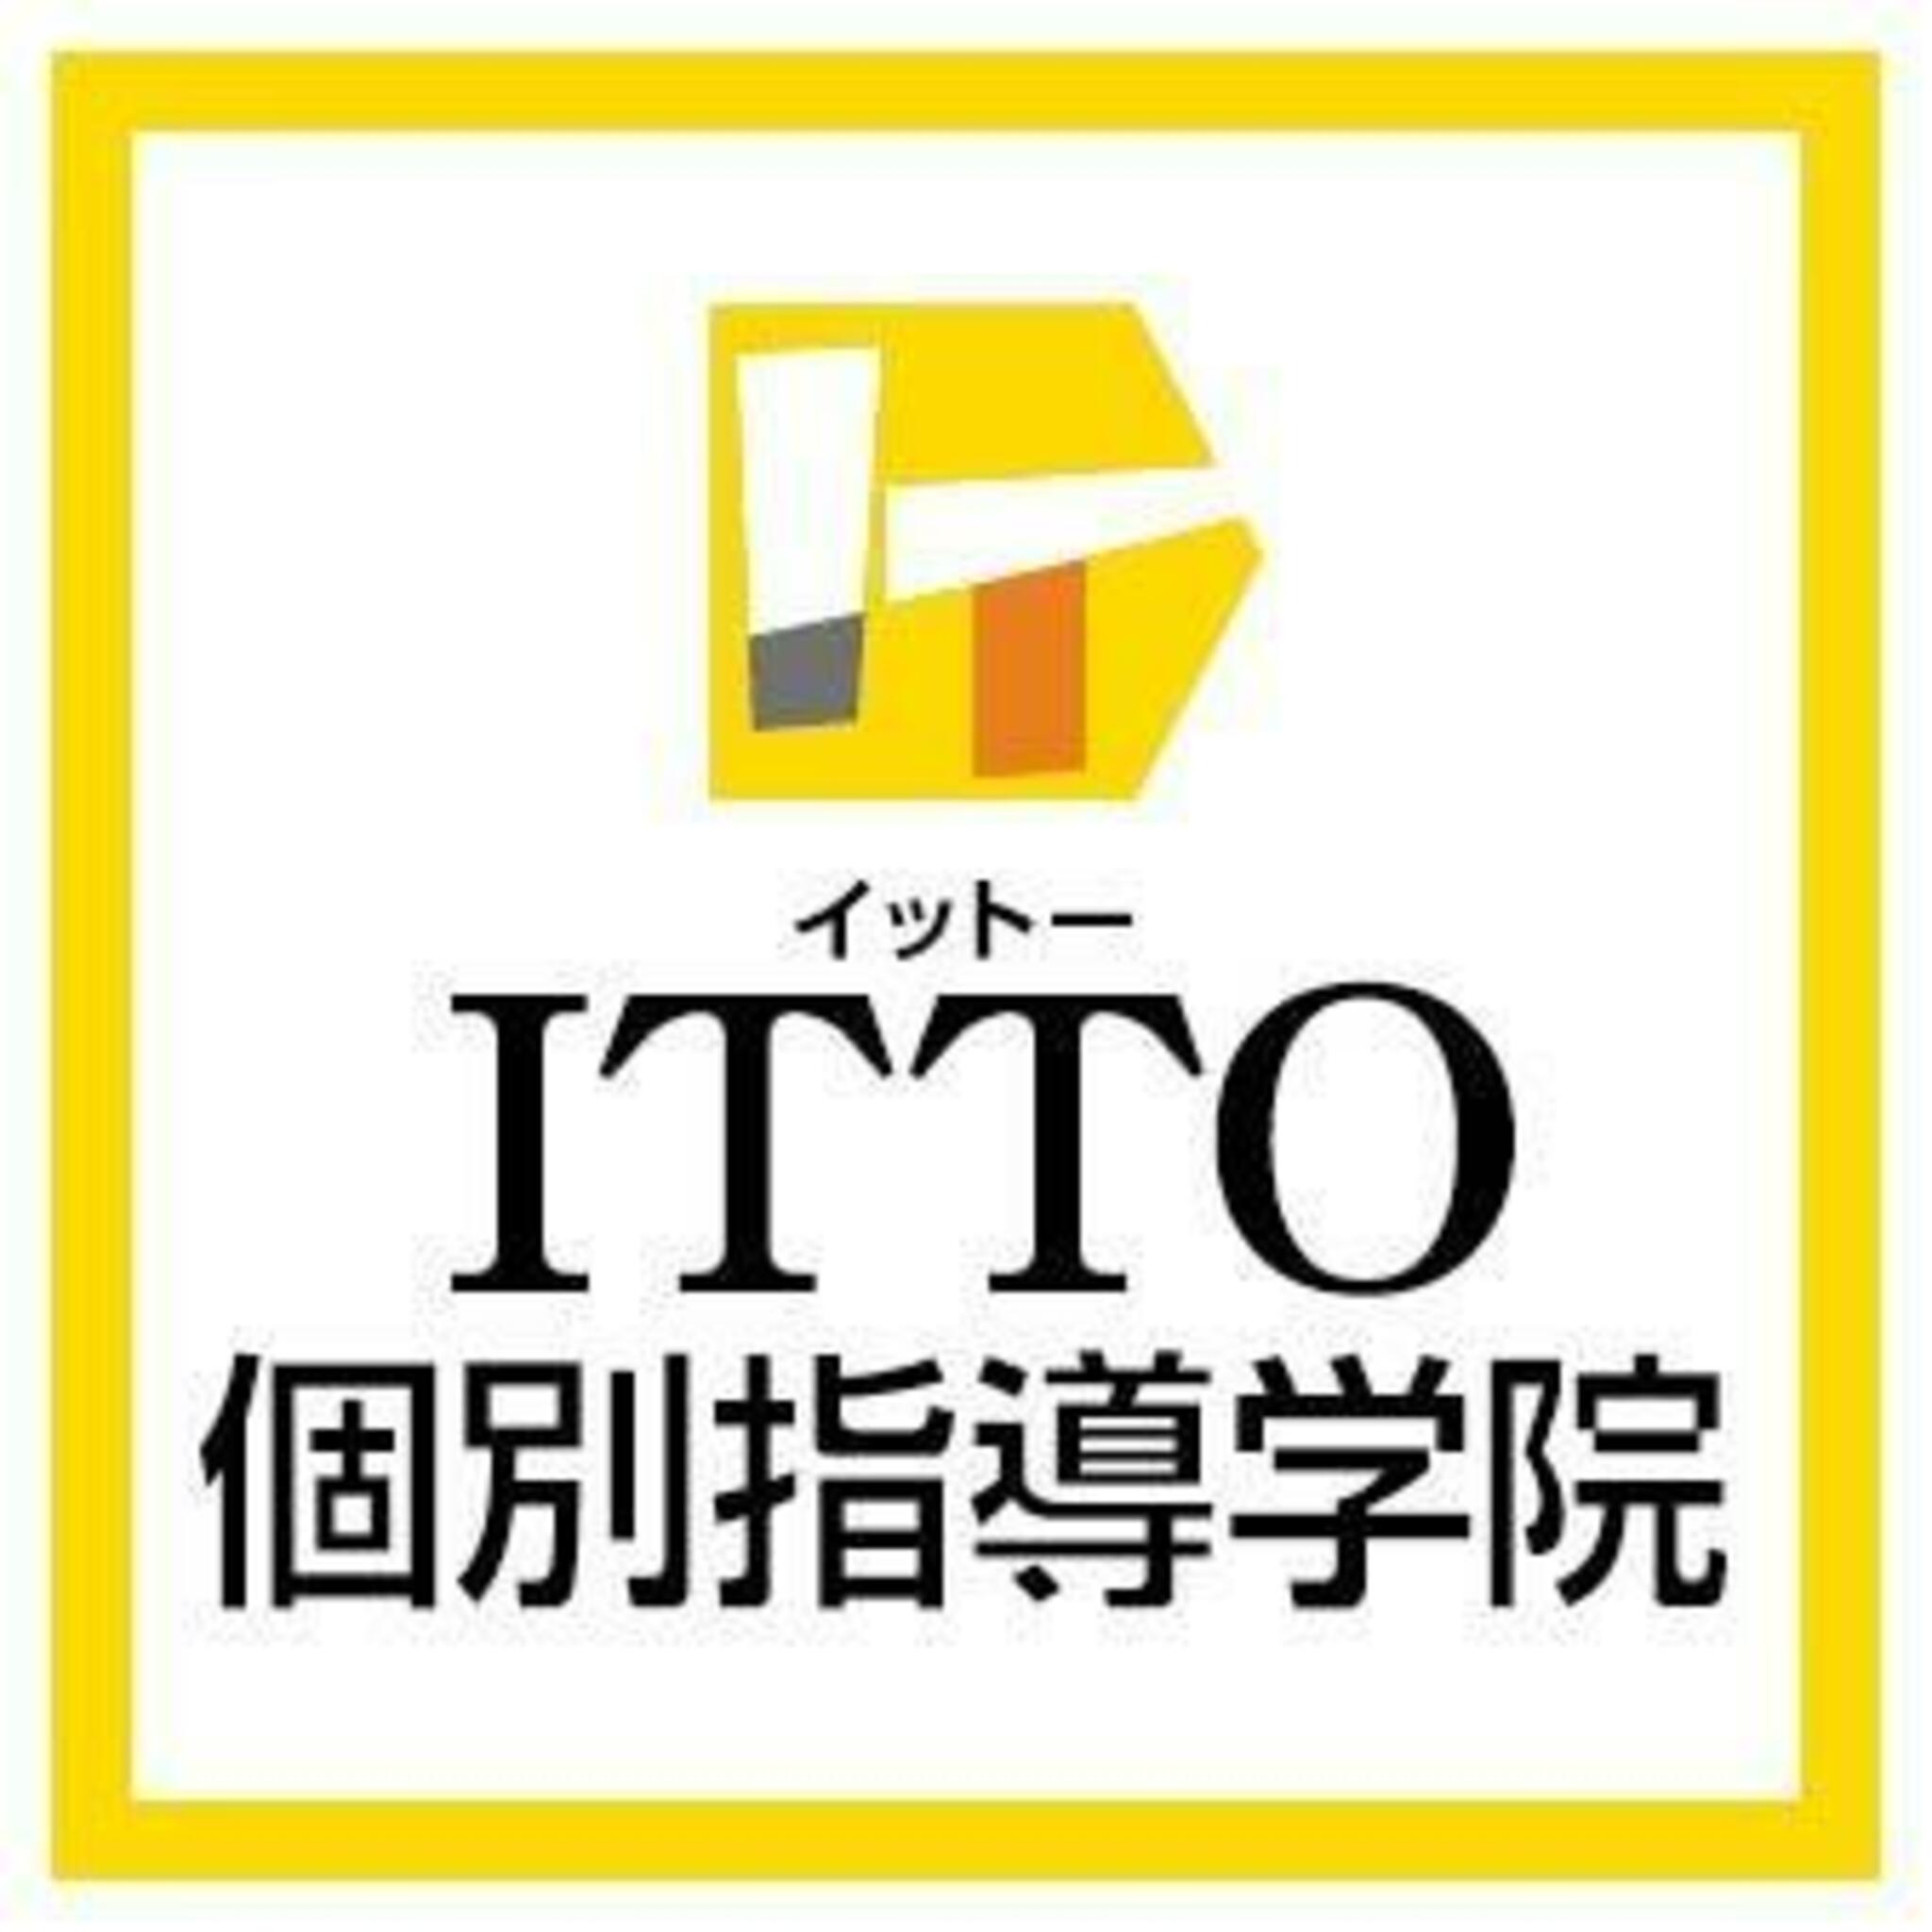 ITTO個別指導学院 醍醐池田校の代表写真6